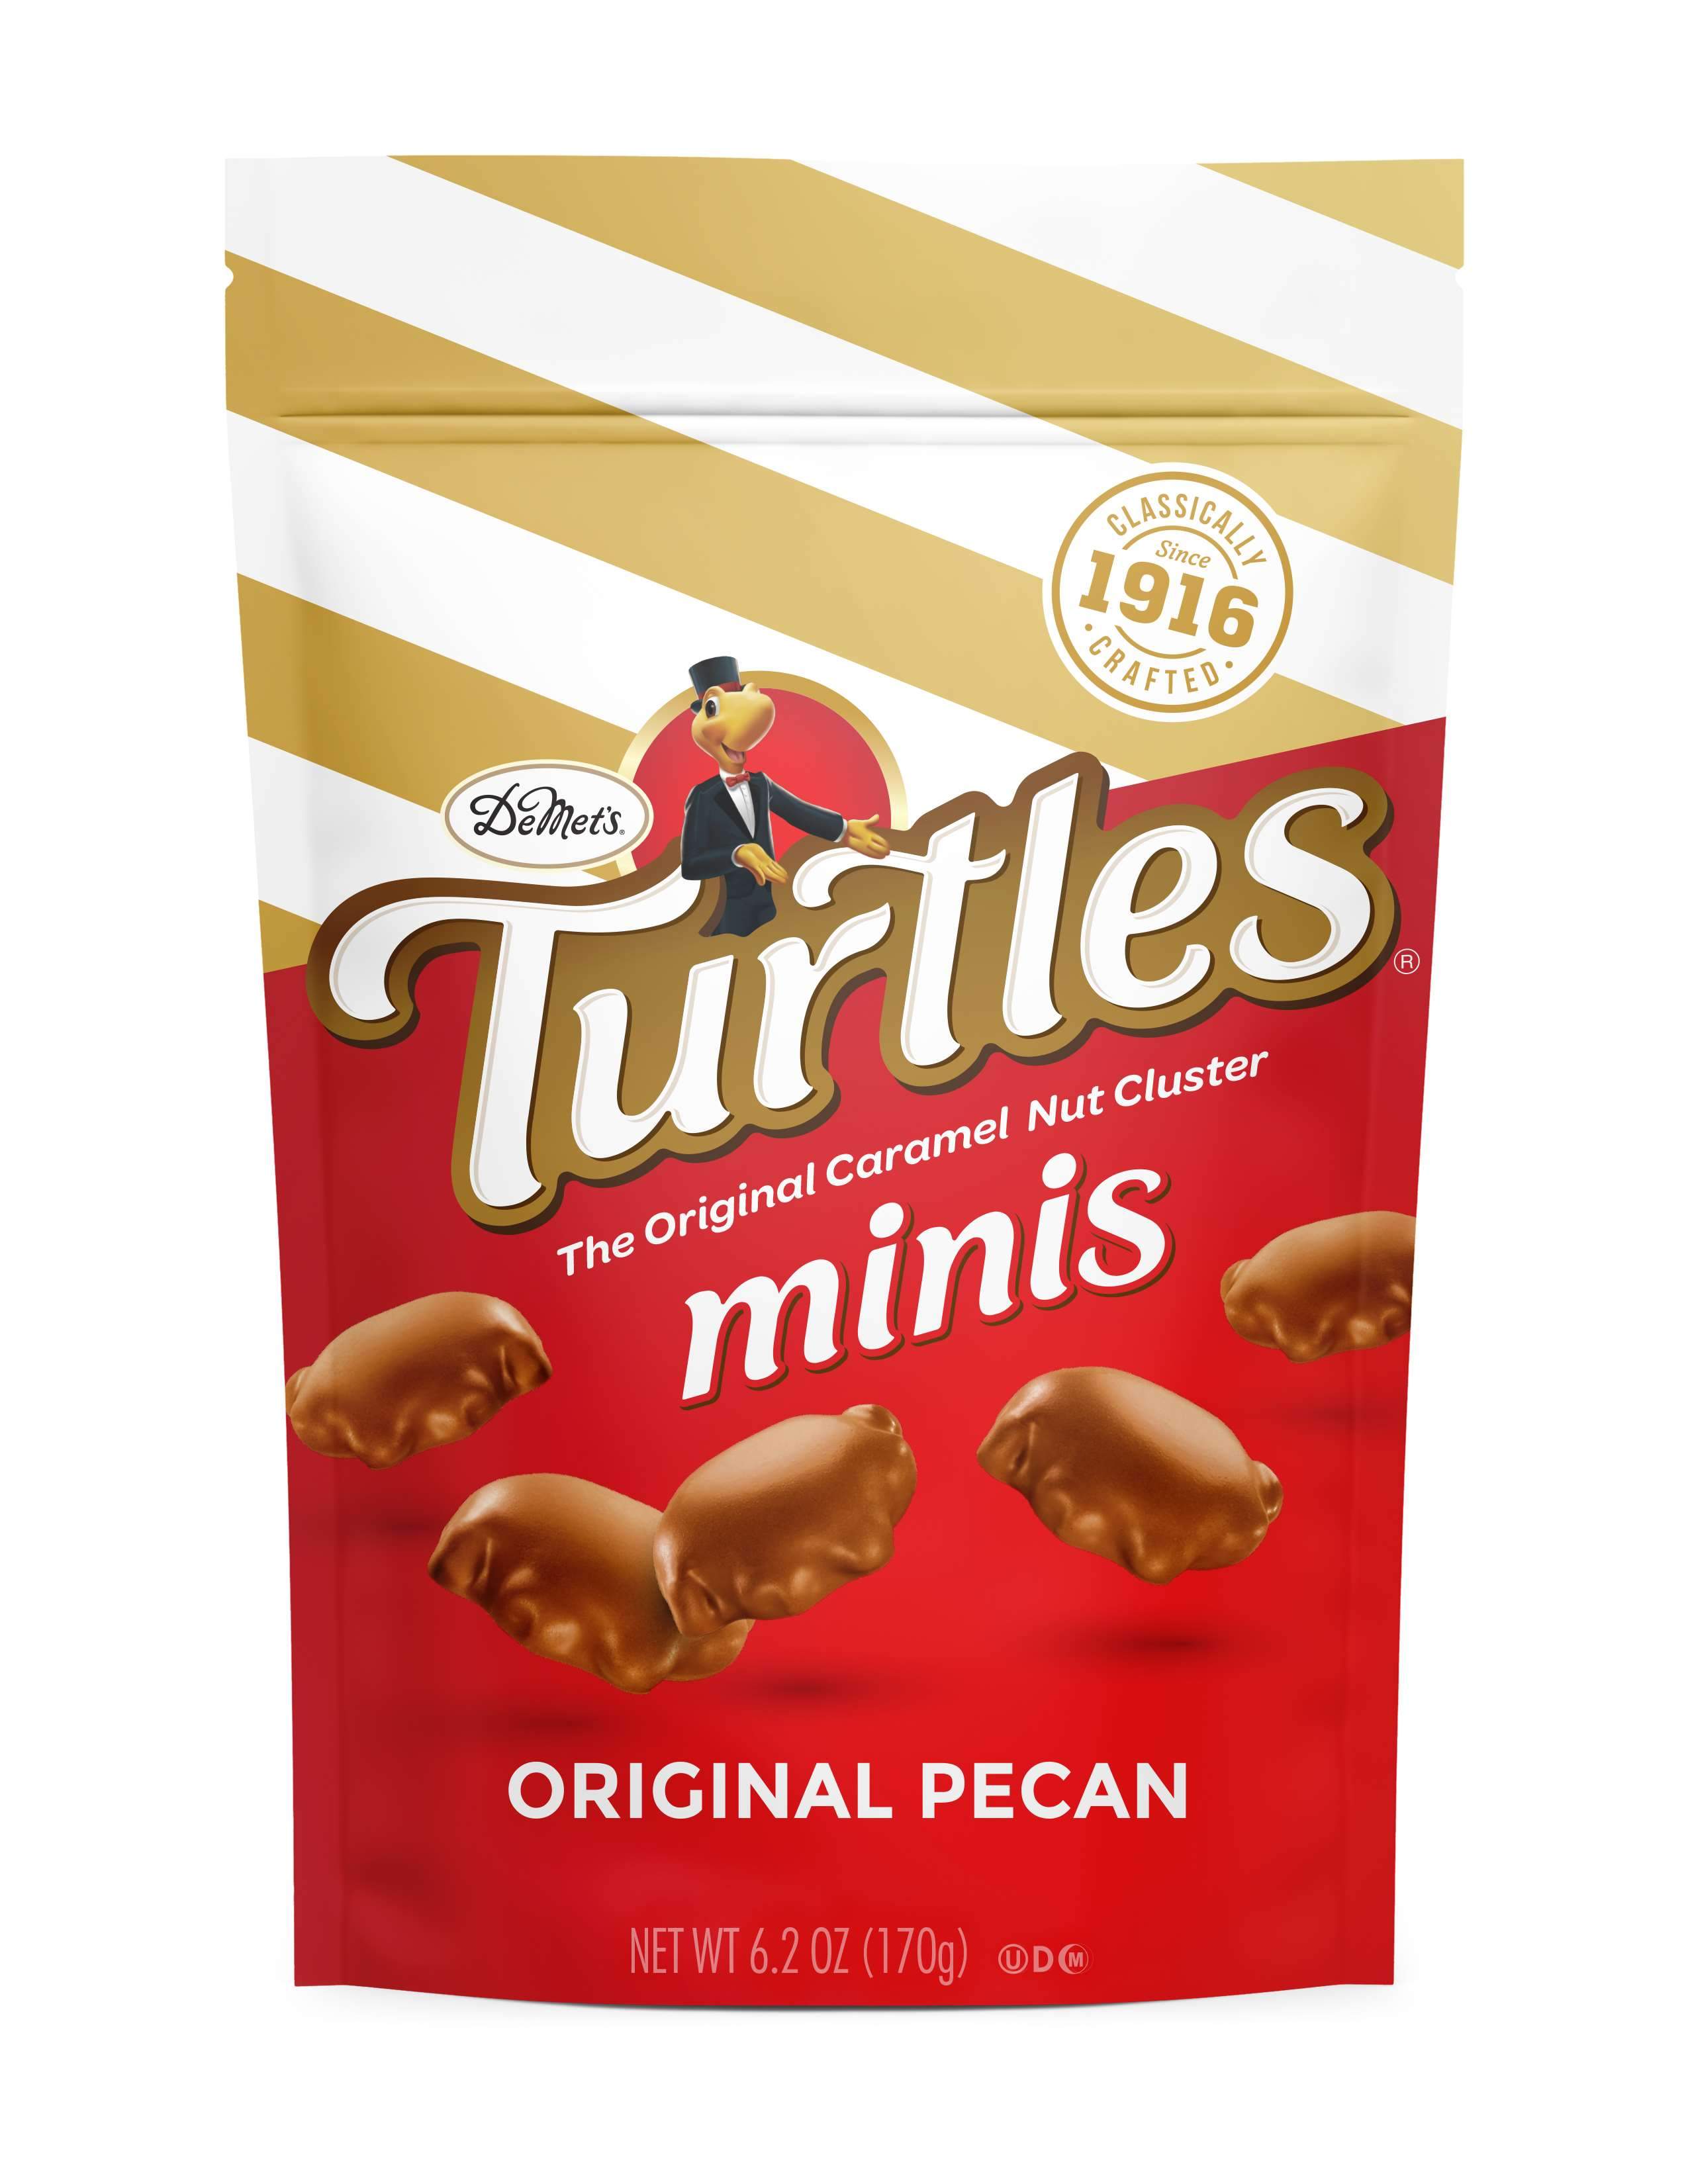 Demet's Turtles - The Original Caramel Nut Cluster Demet's Original Pecan-Minis 6.2 Ounce 